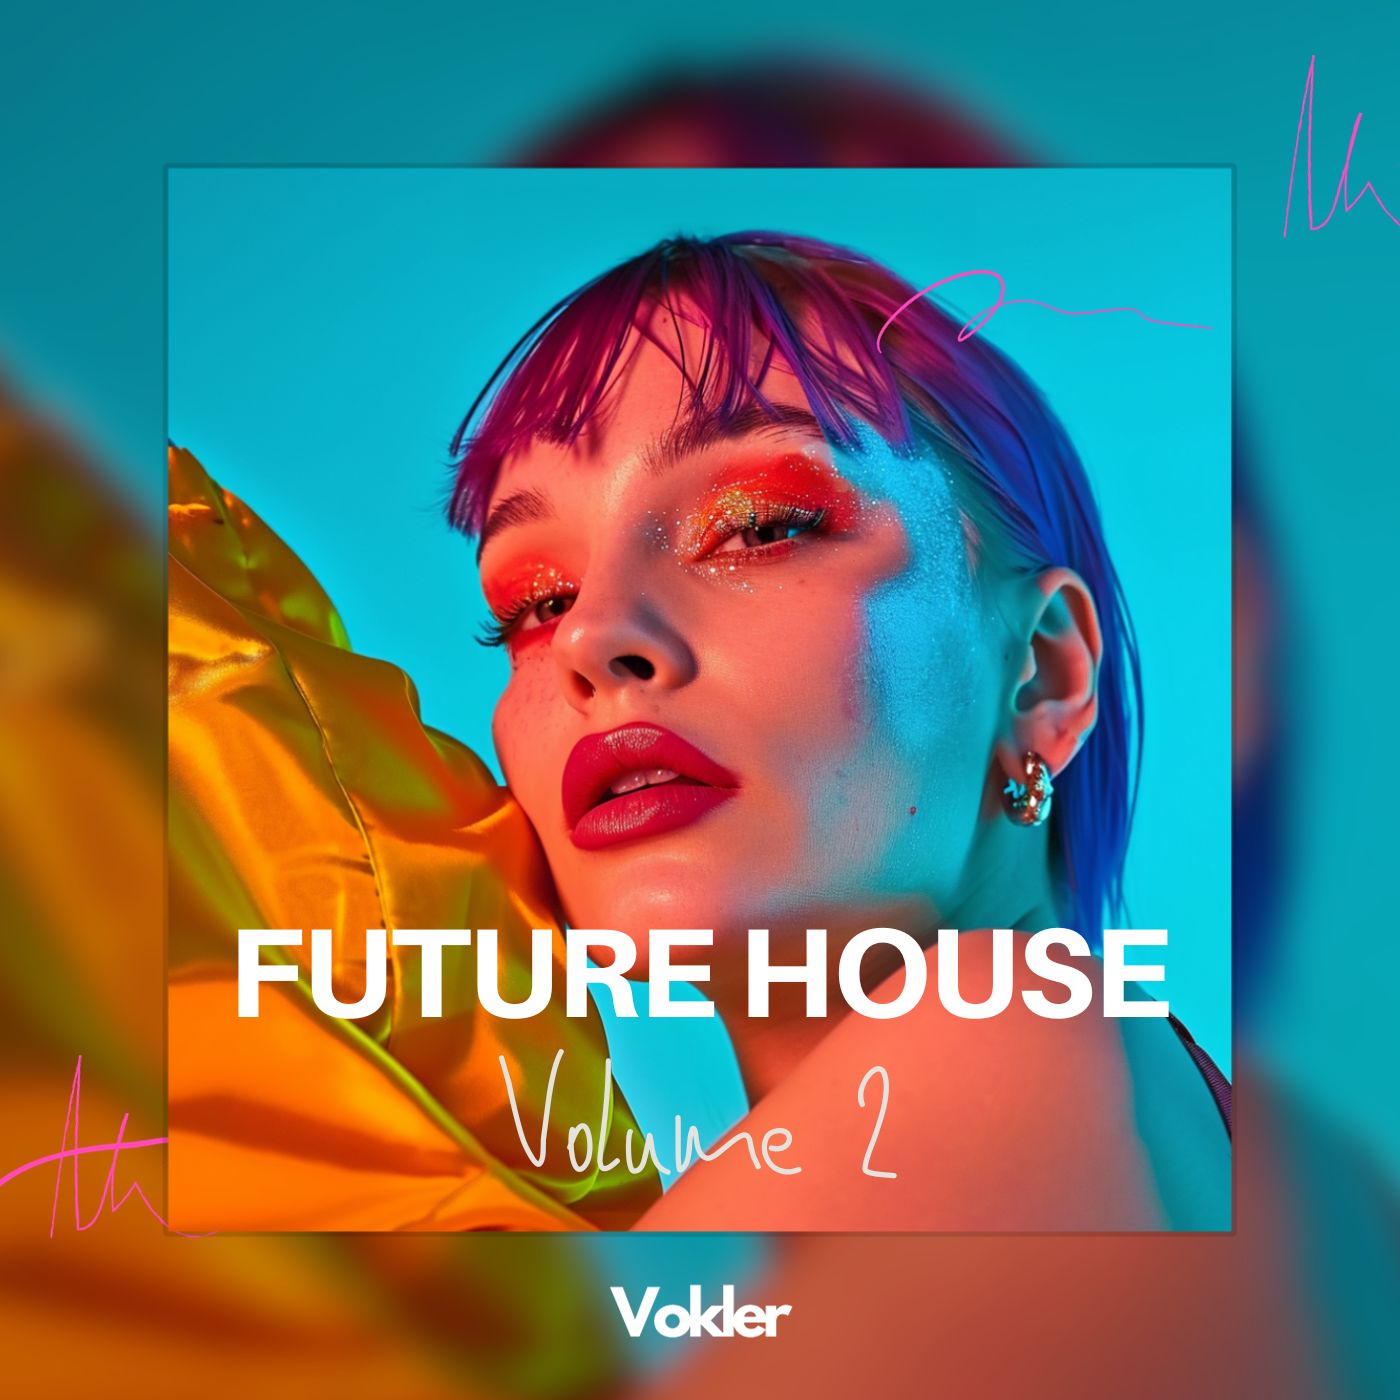 Future House Vol. 3